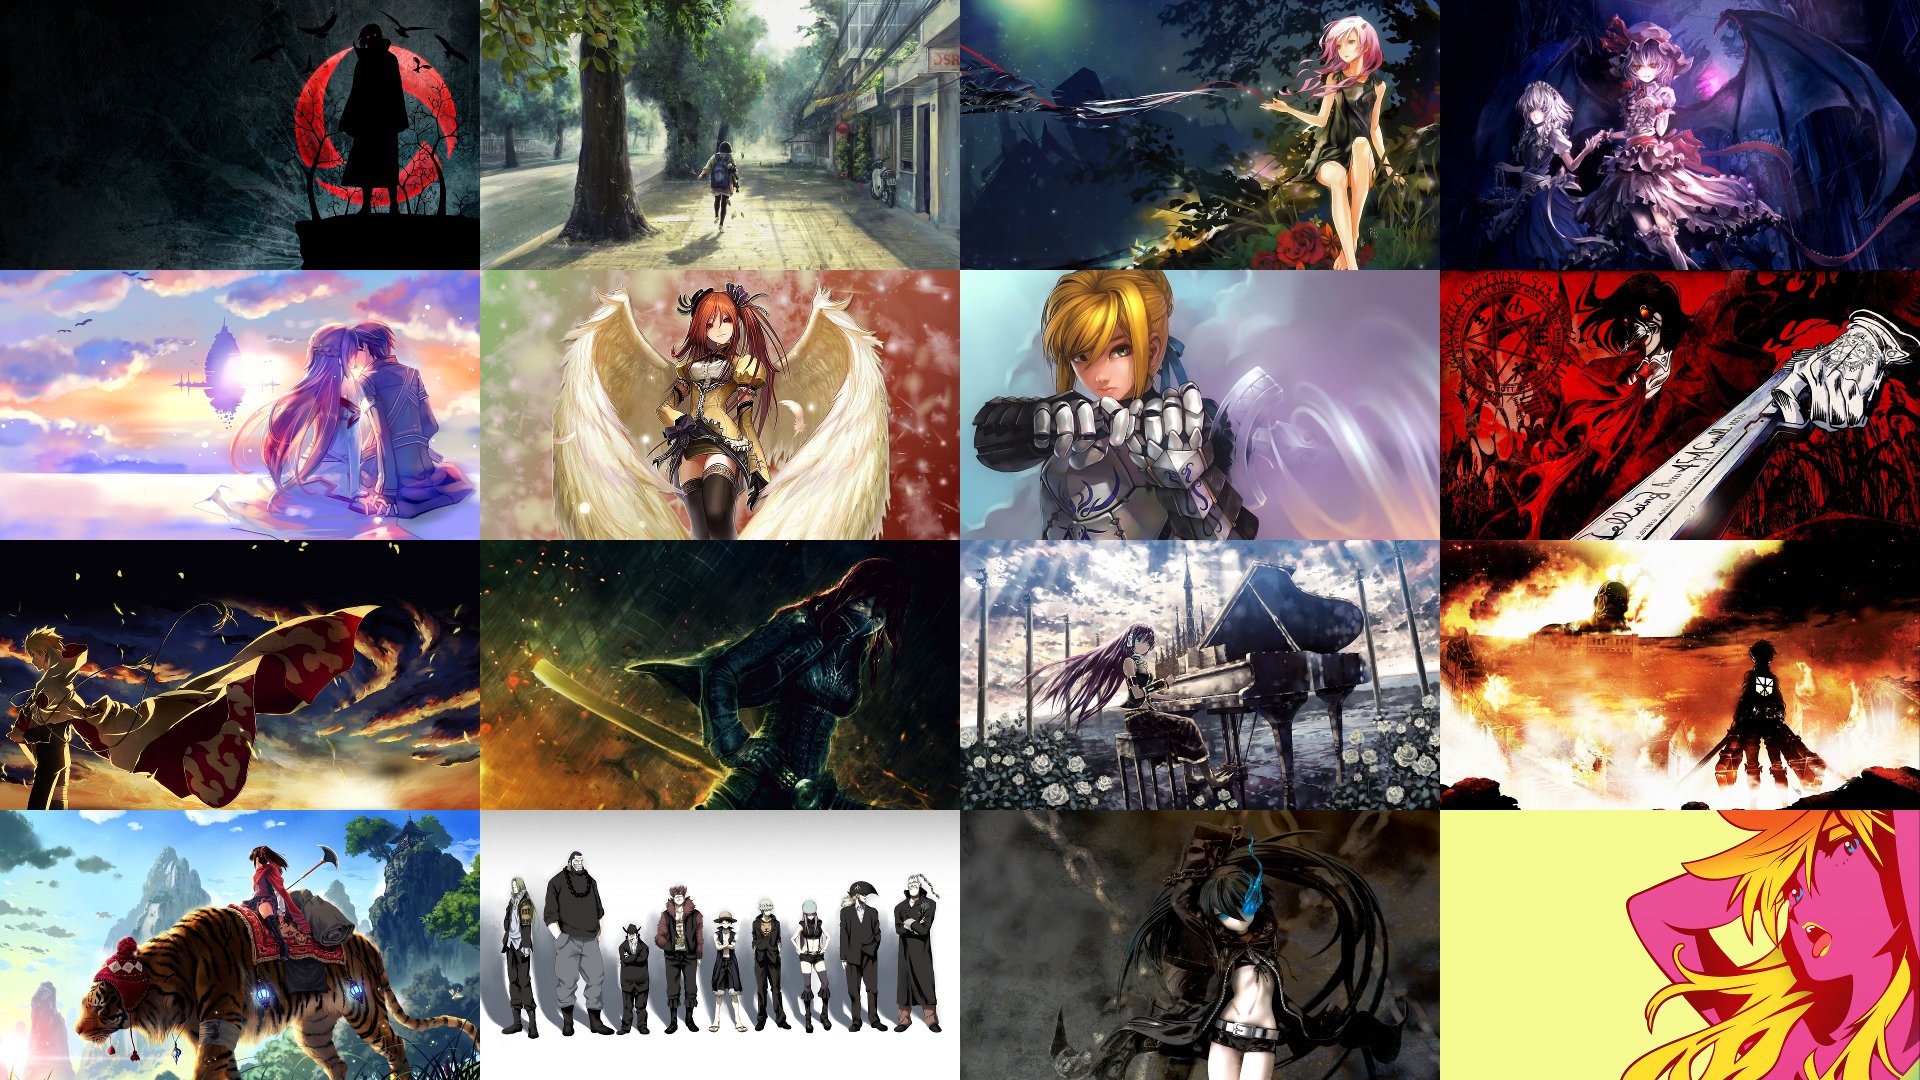 wallpaper de animes hd,action adventure game,games,art,cg artwork,graphic design